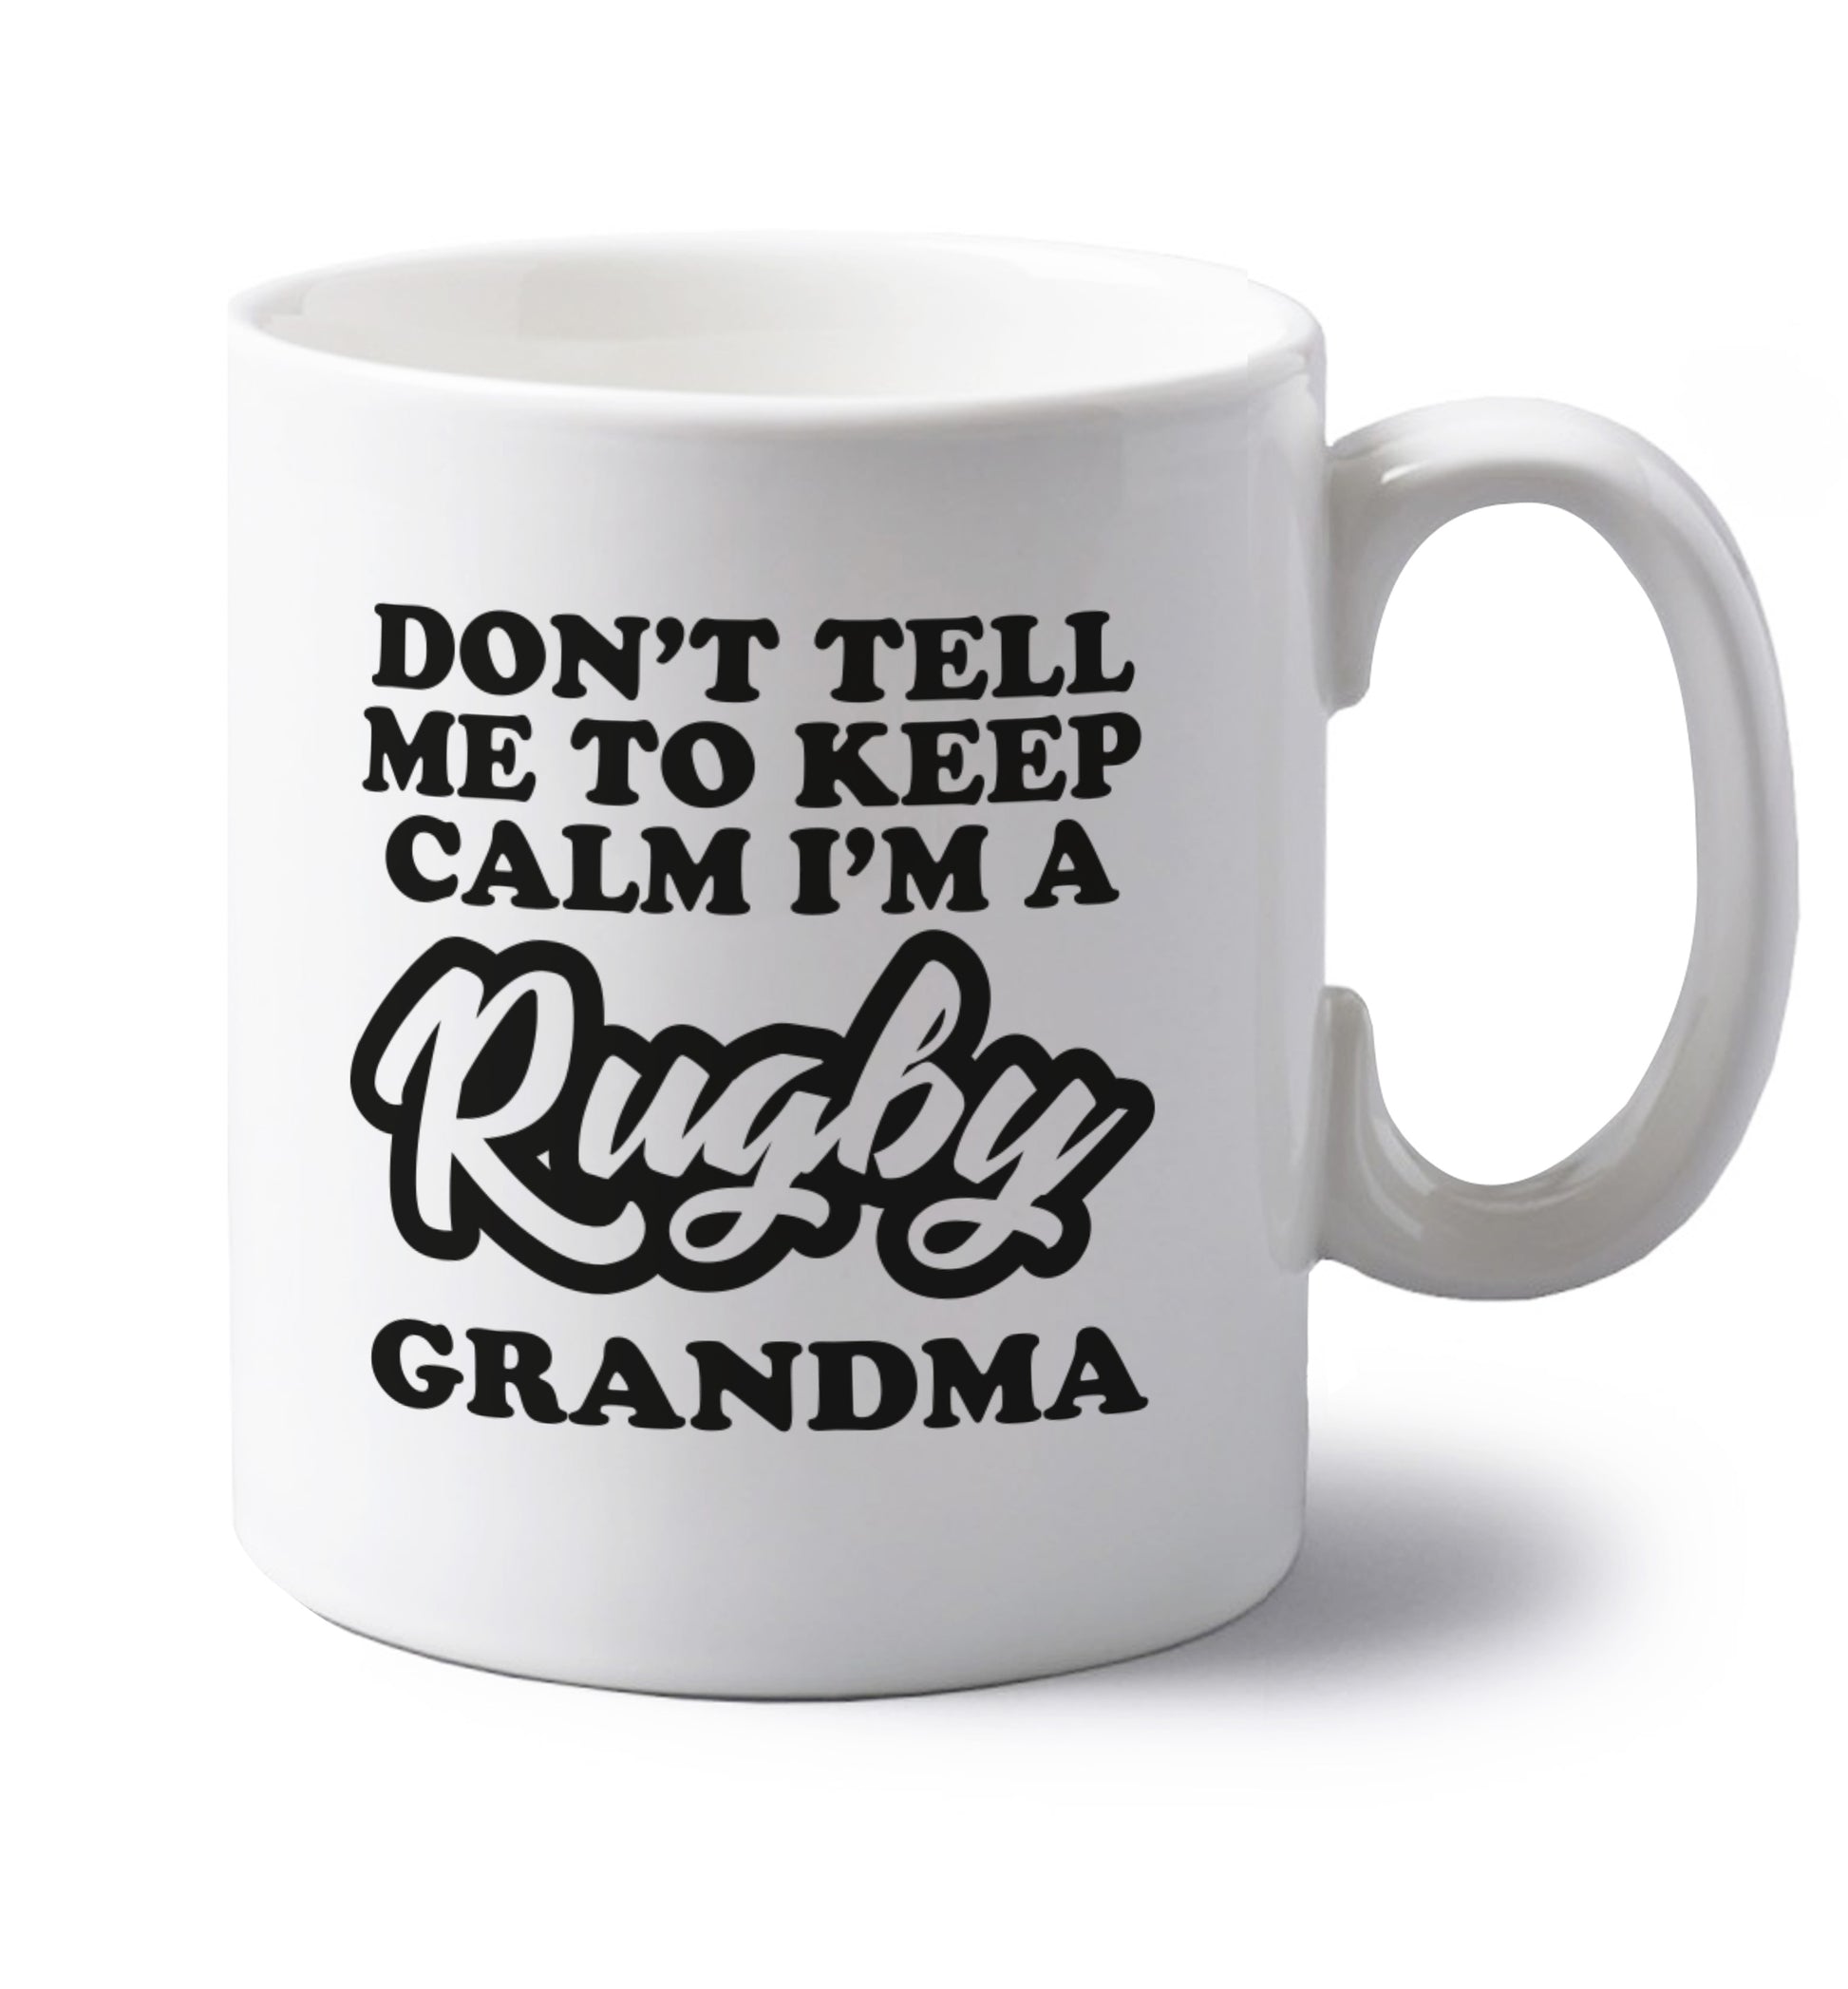 Don't tell me to keep calm I'm a rugby grandma left handed white ceramic mug 